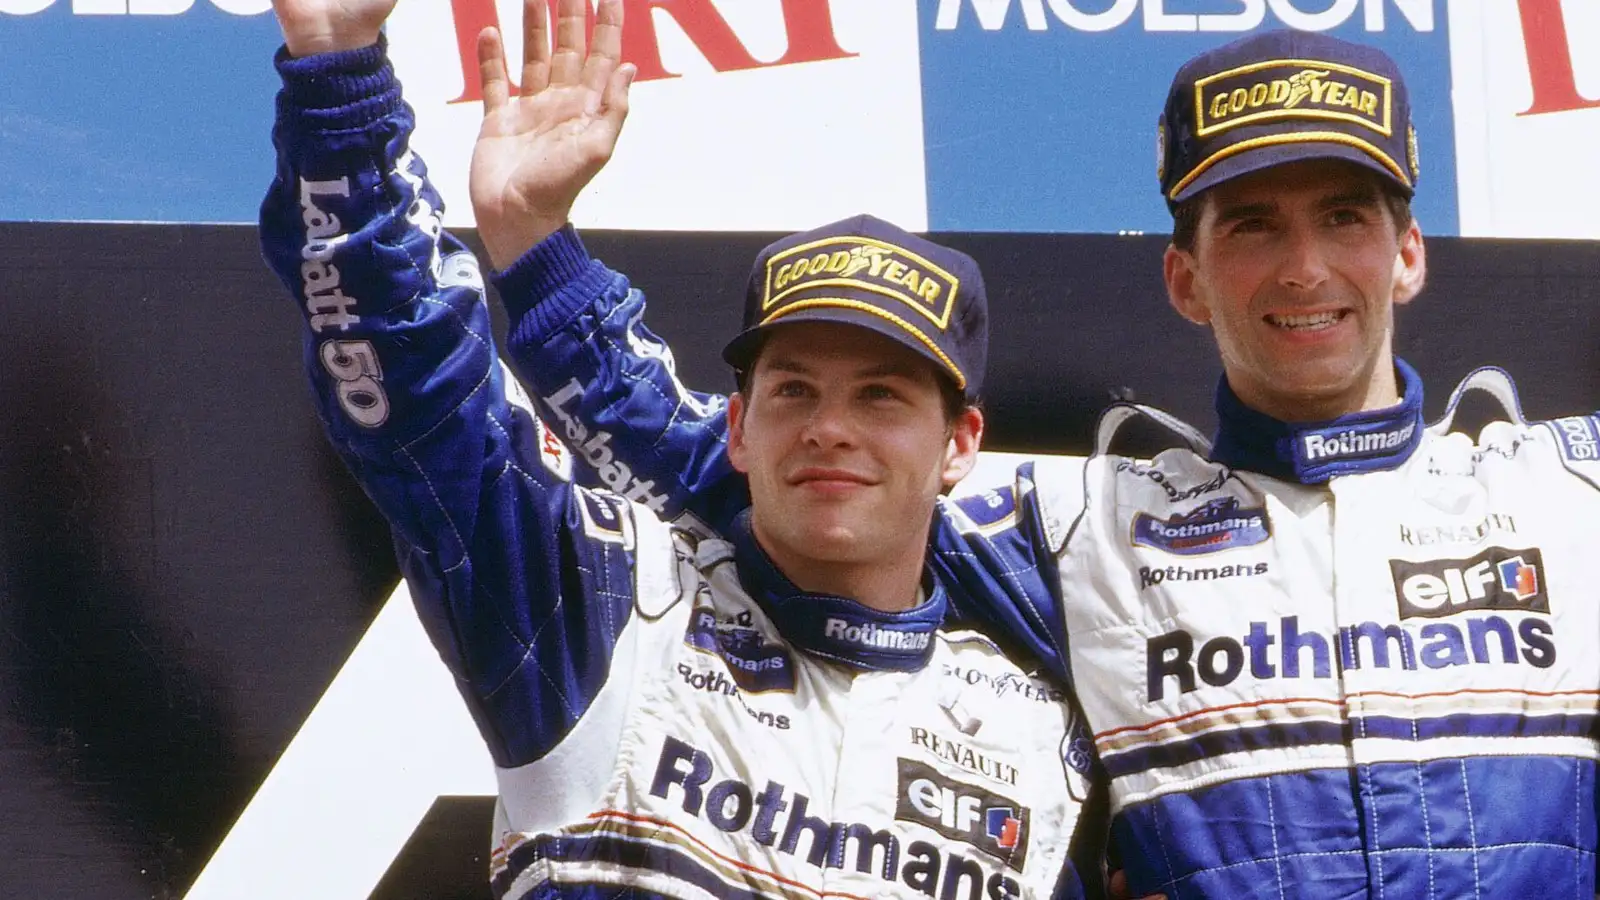 Damon Hill beat Jacques Villeneuve, the team-mates on the podium. Canada 1996